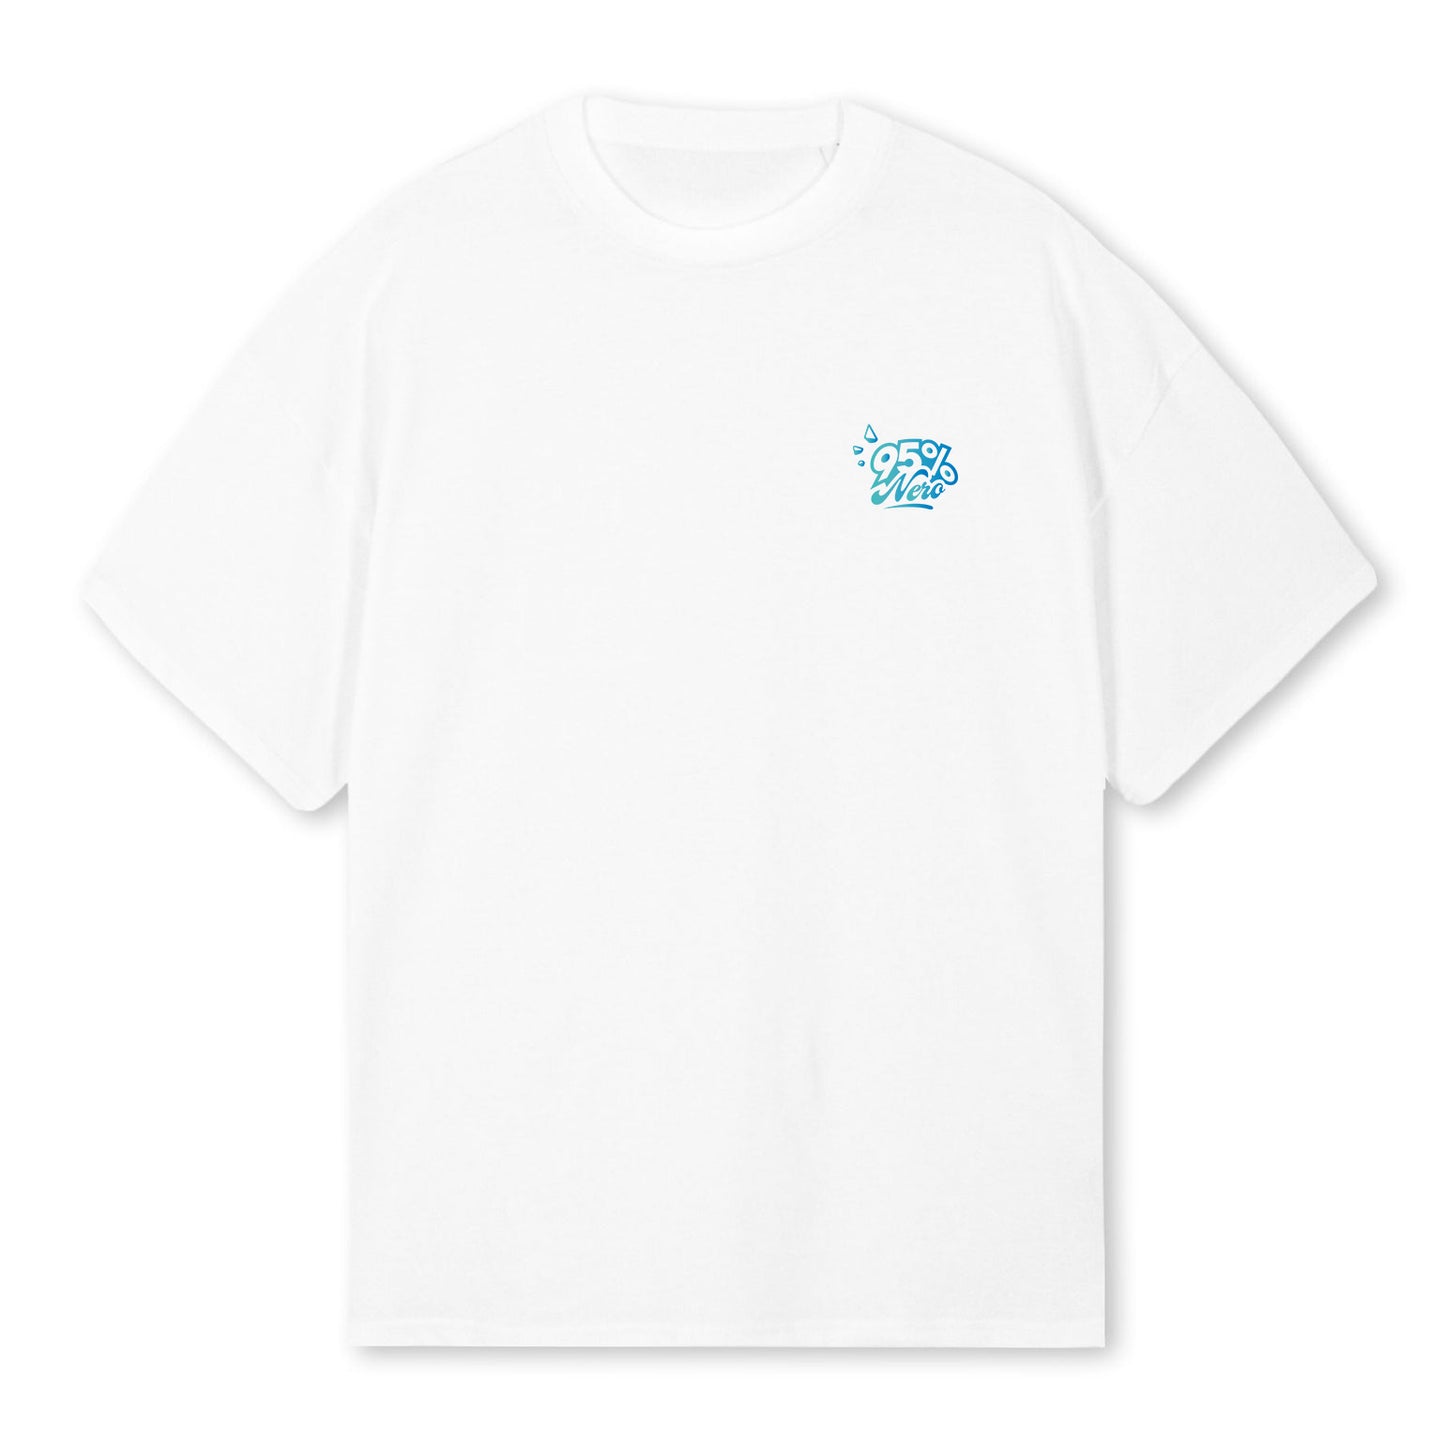 T-shirt Oversize 95%NERO (BLUE VISION)